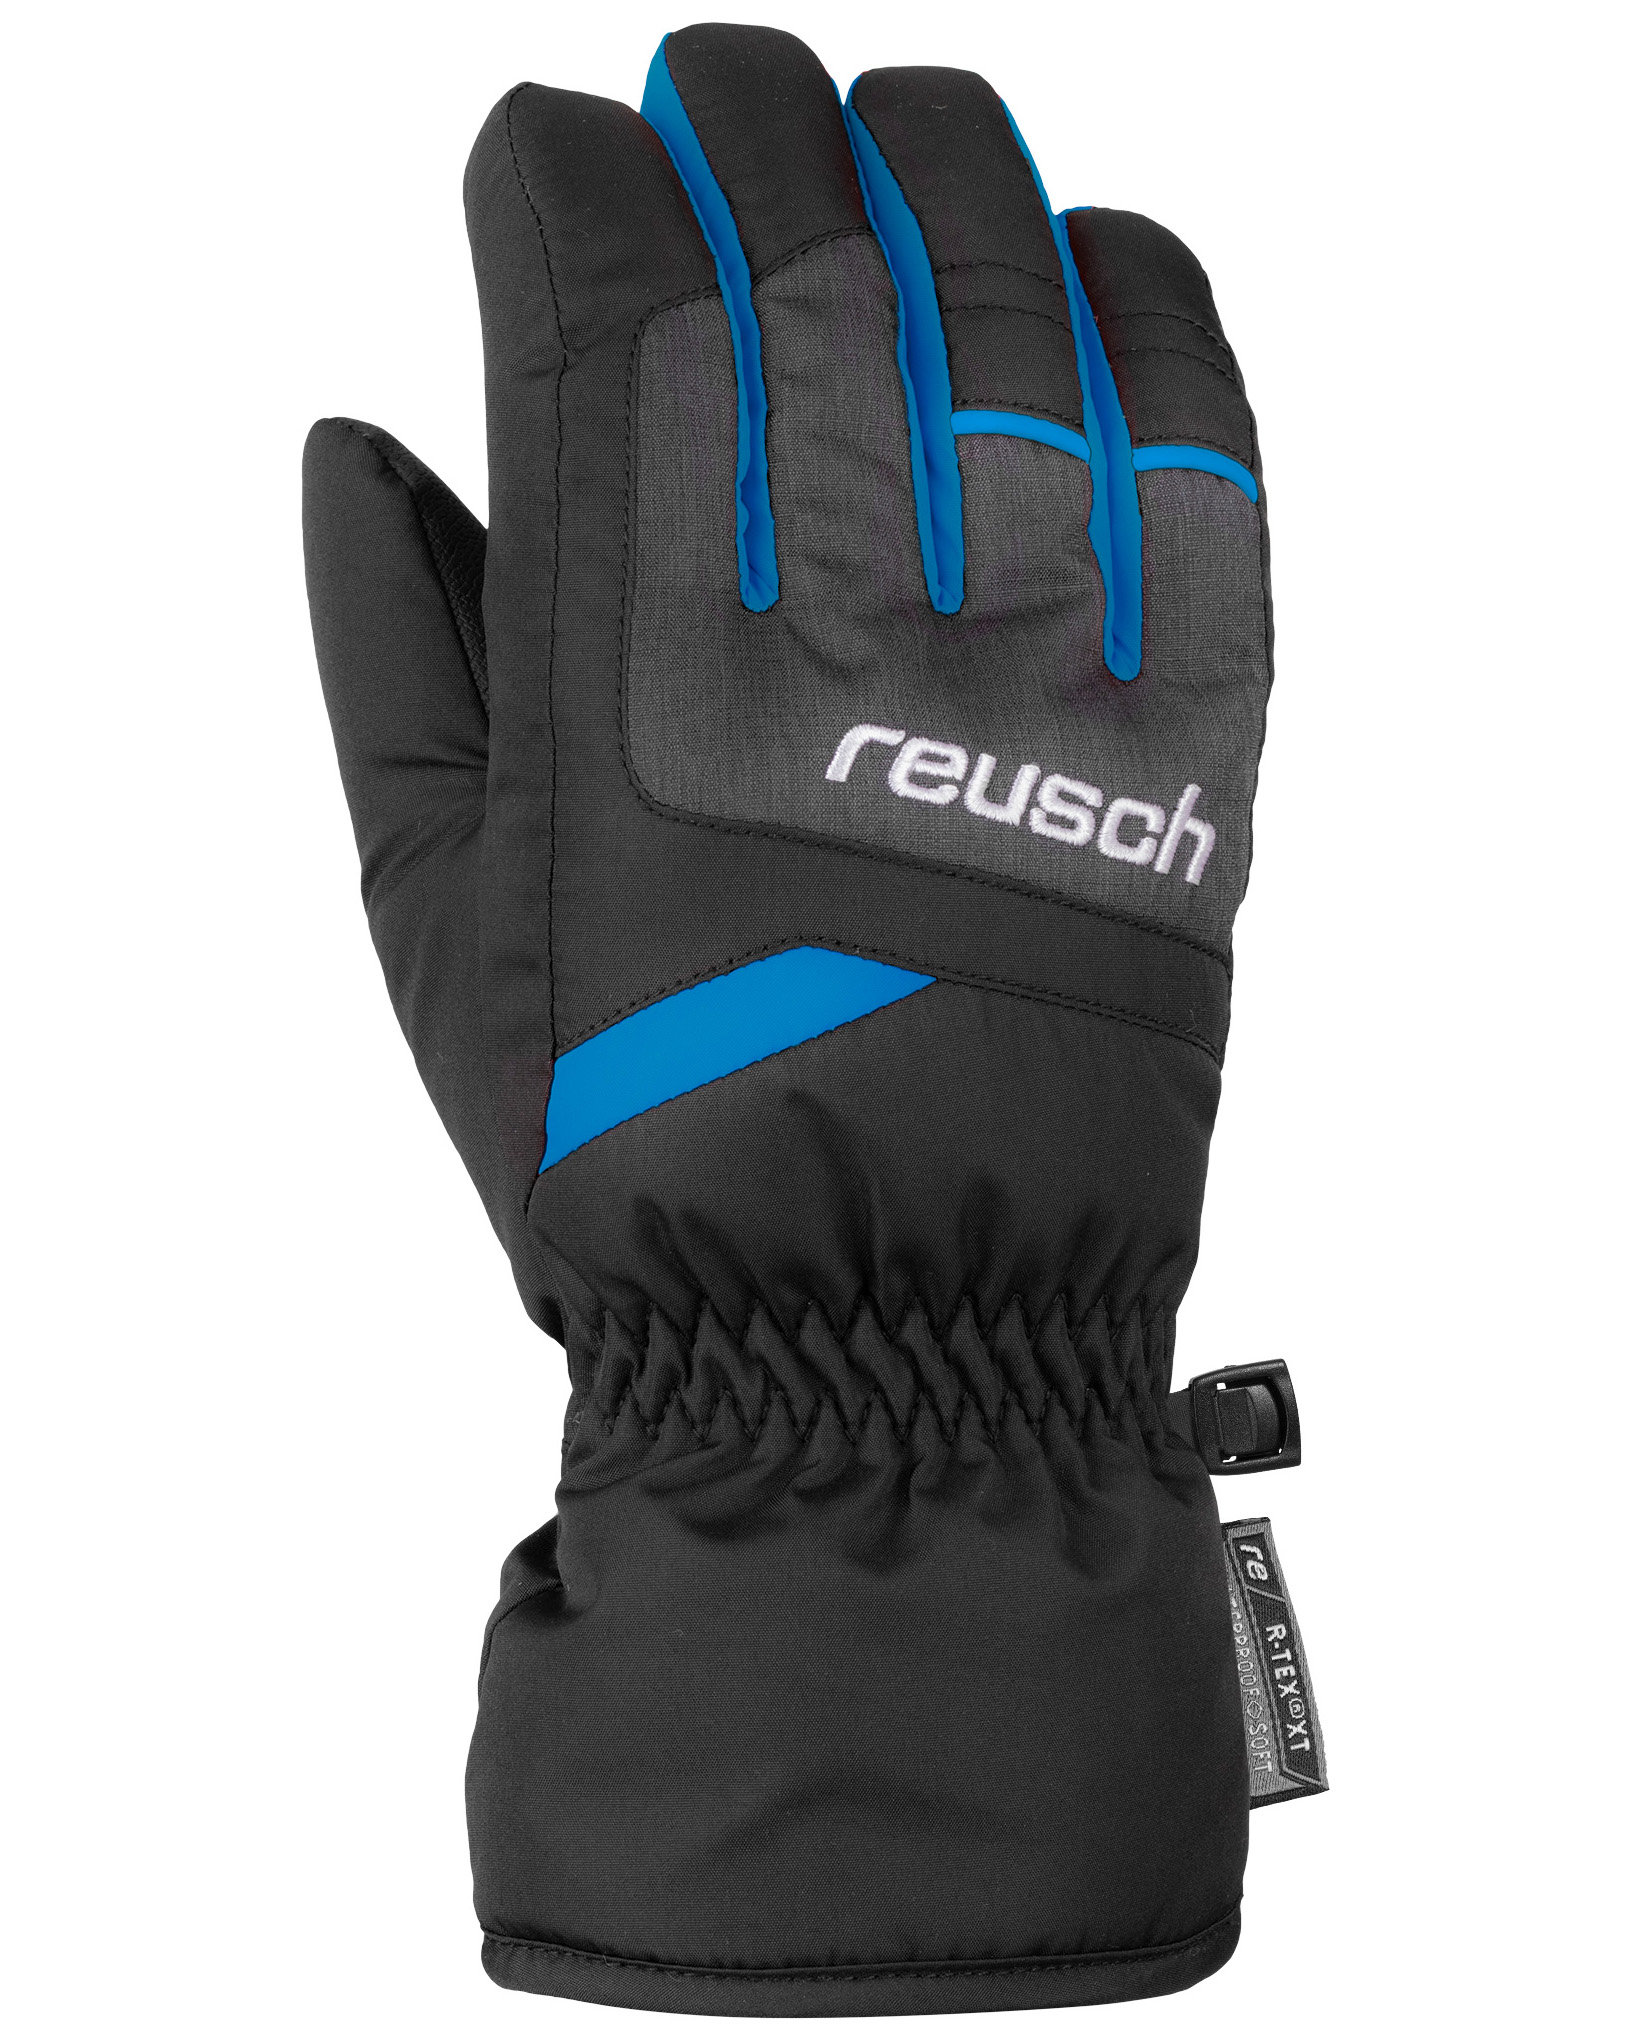 Перчатки Reusch Bennet R-Tex® Xt, black/black melange/brilliant blue, 6.5 Inch варежки reusch bennet r tex® xt black black melange pink glo 4 inch